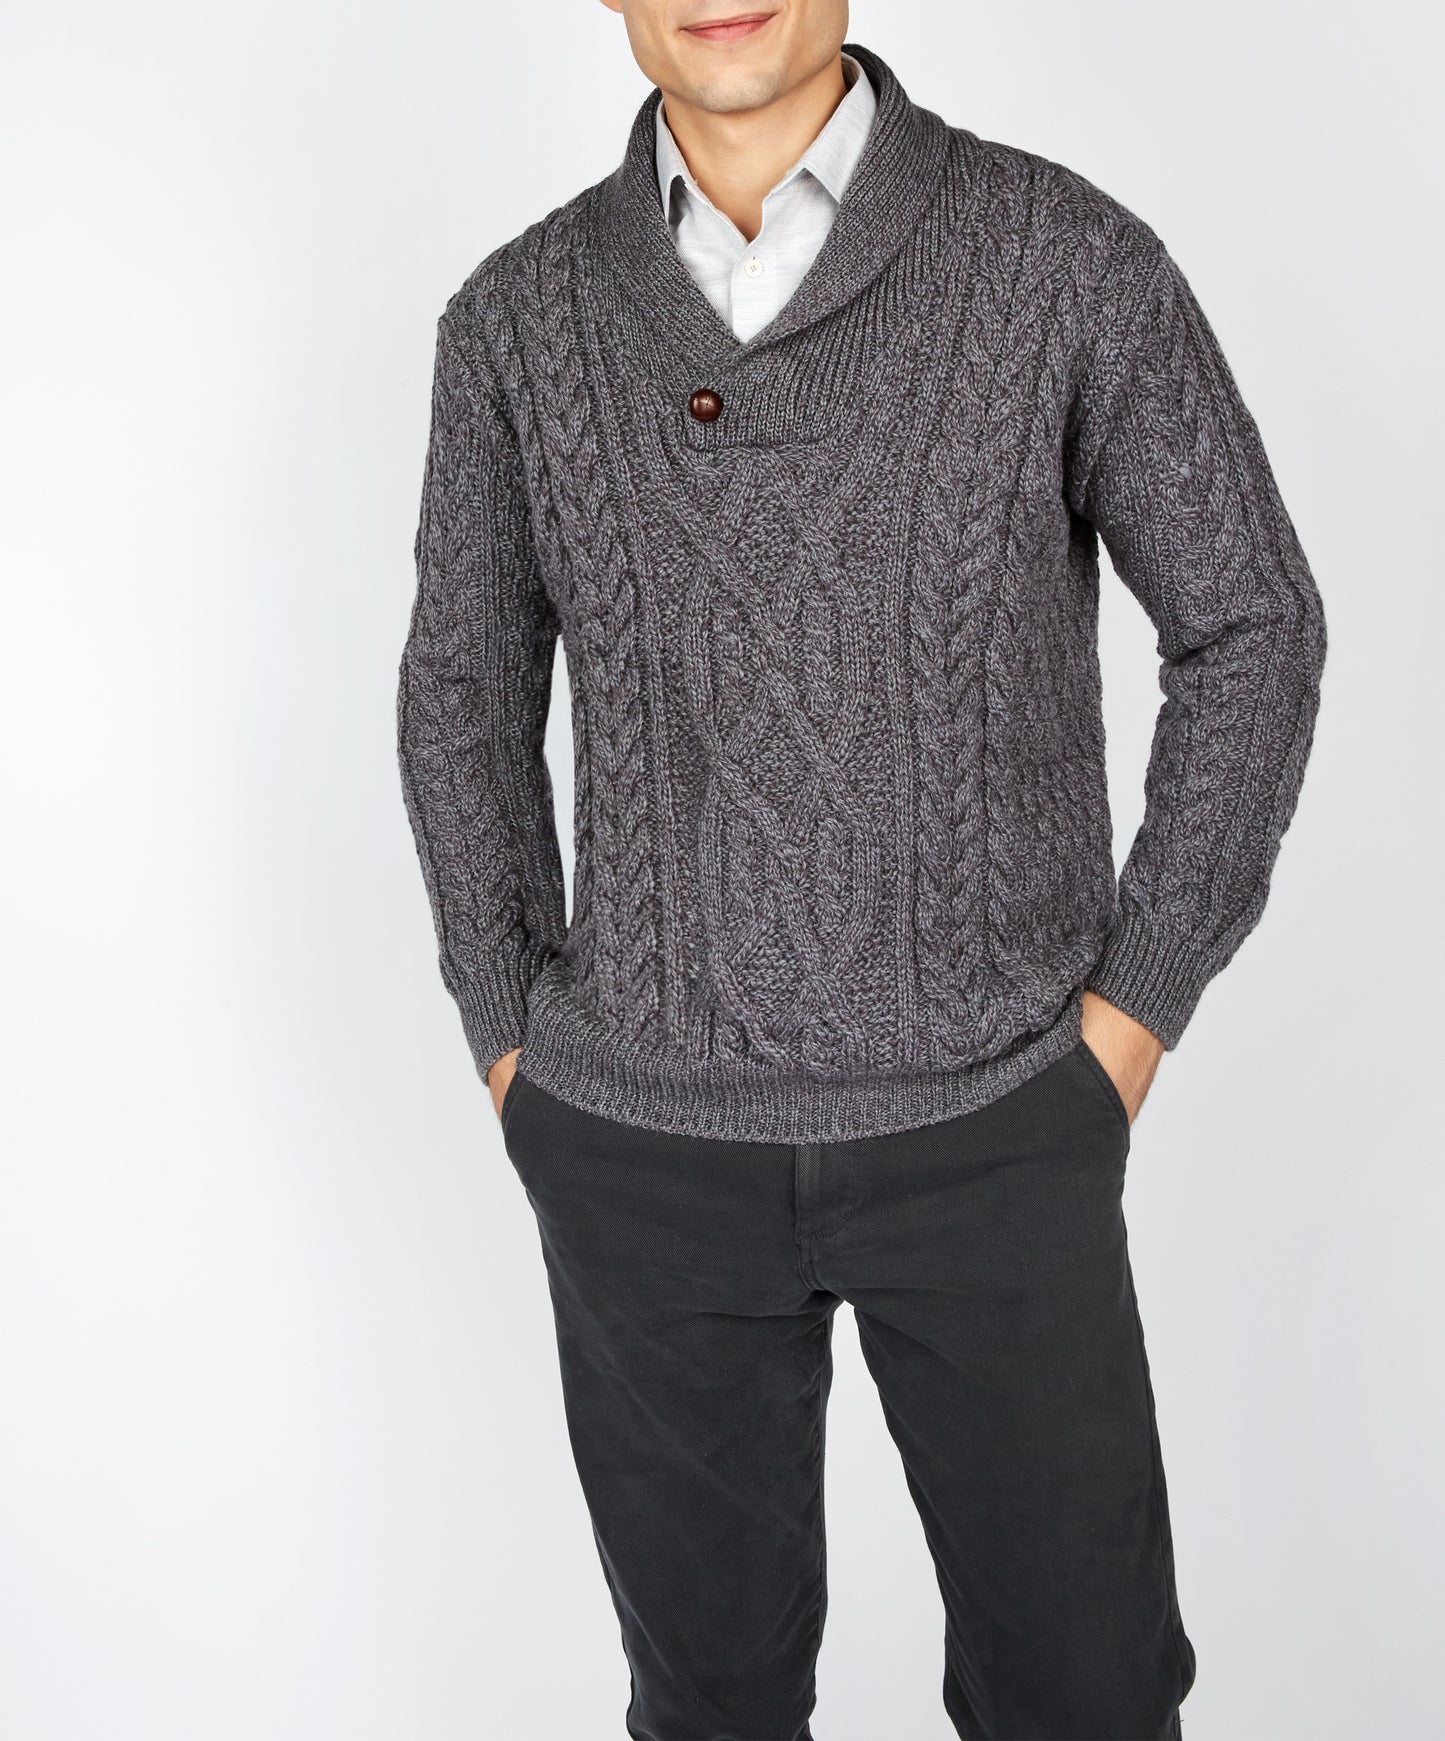 IrelandsEye Knitwear Dair Aran Shawl Collar Sweater in Steel Marl Merino